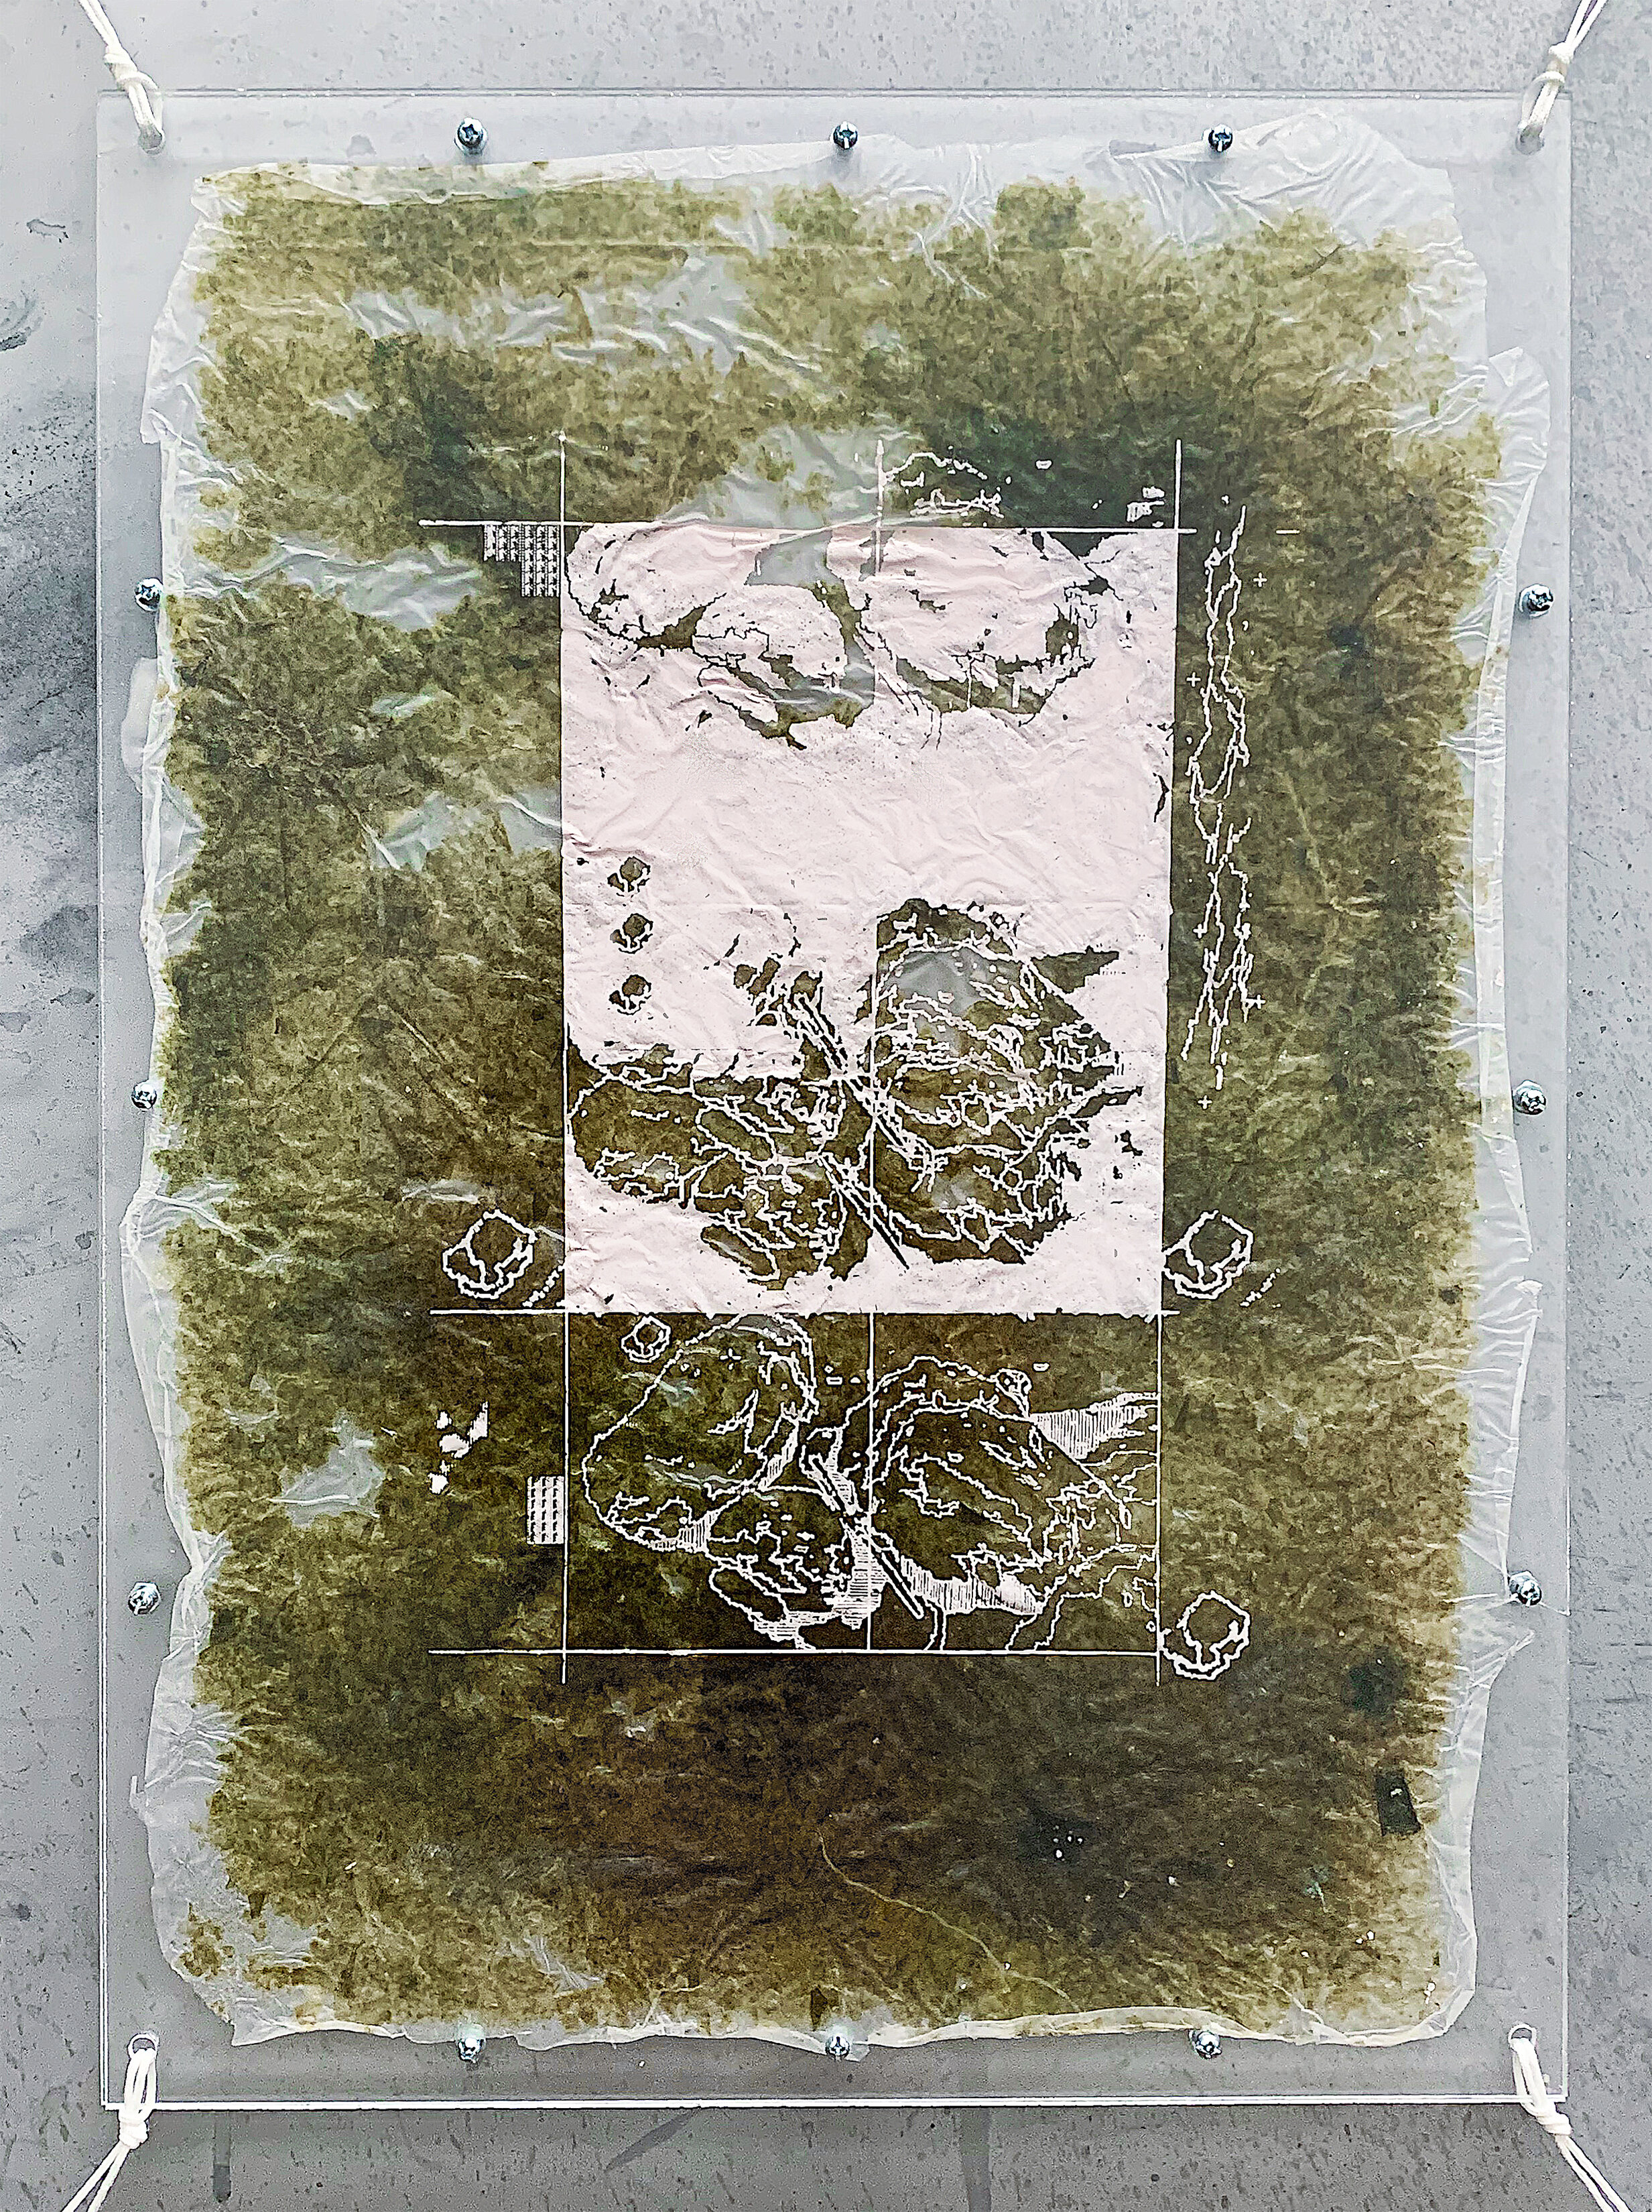   AOEp_PlumBeach_1  screenprint on seaweed, acrylic, plexiglass 20.5 x 14.875 x .25 inches 2021  